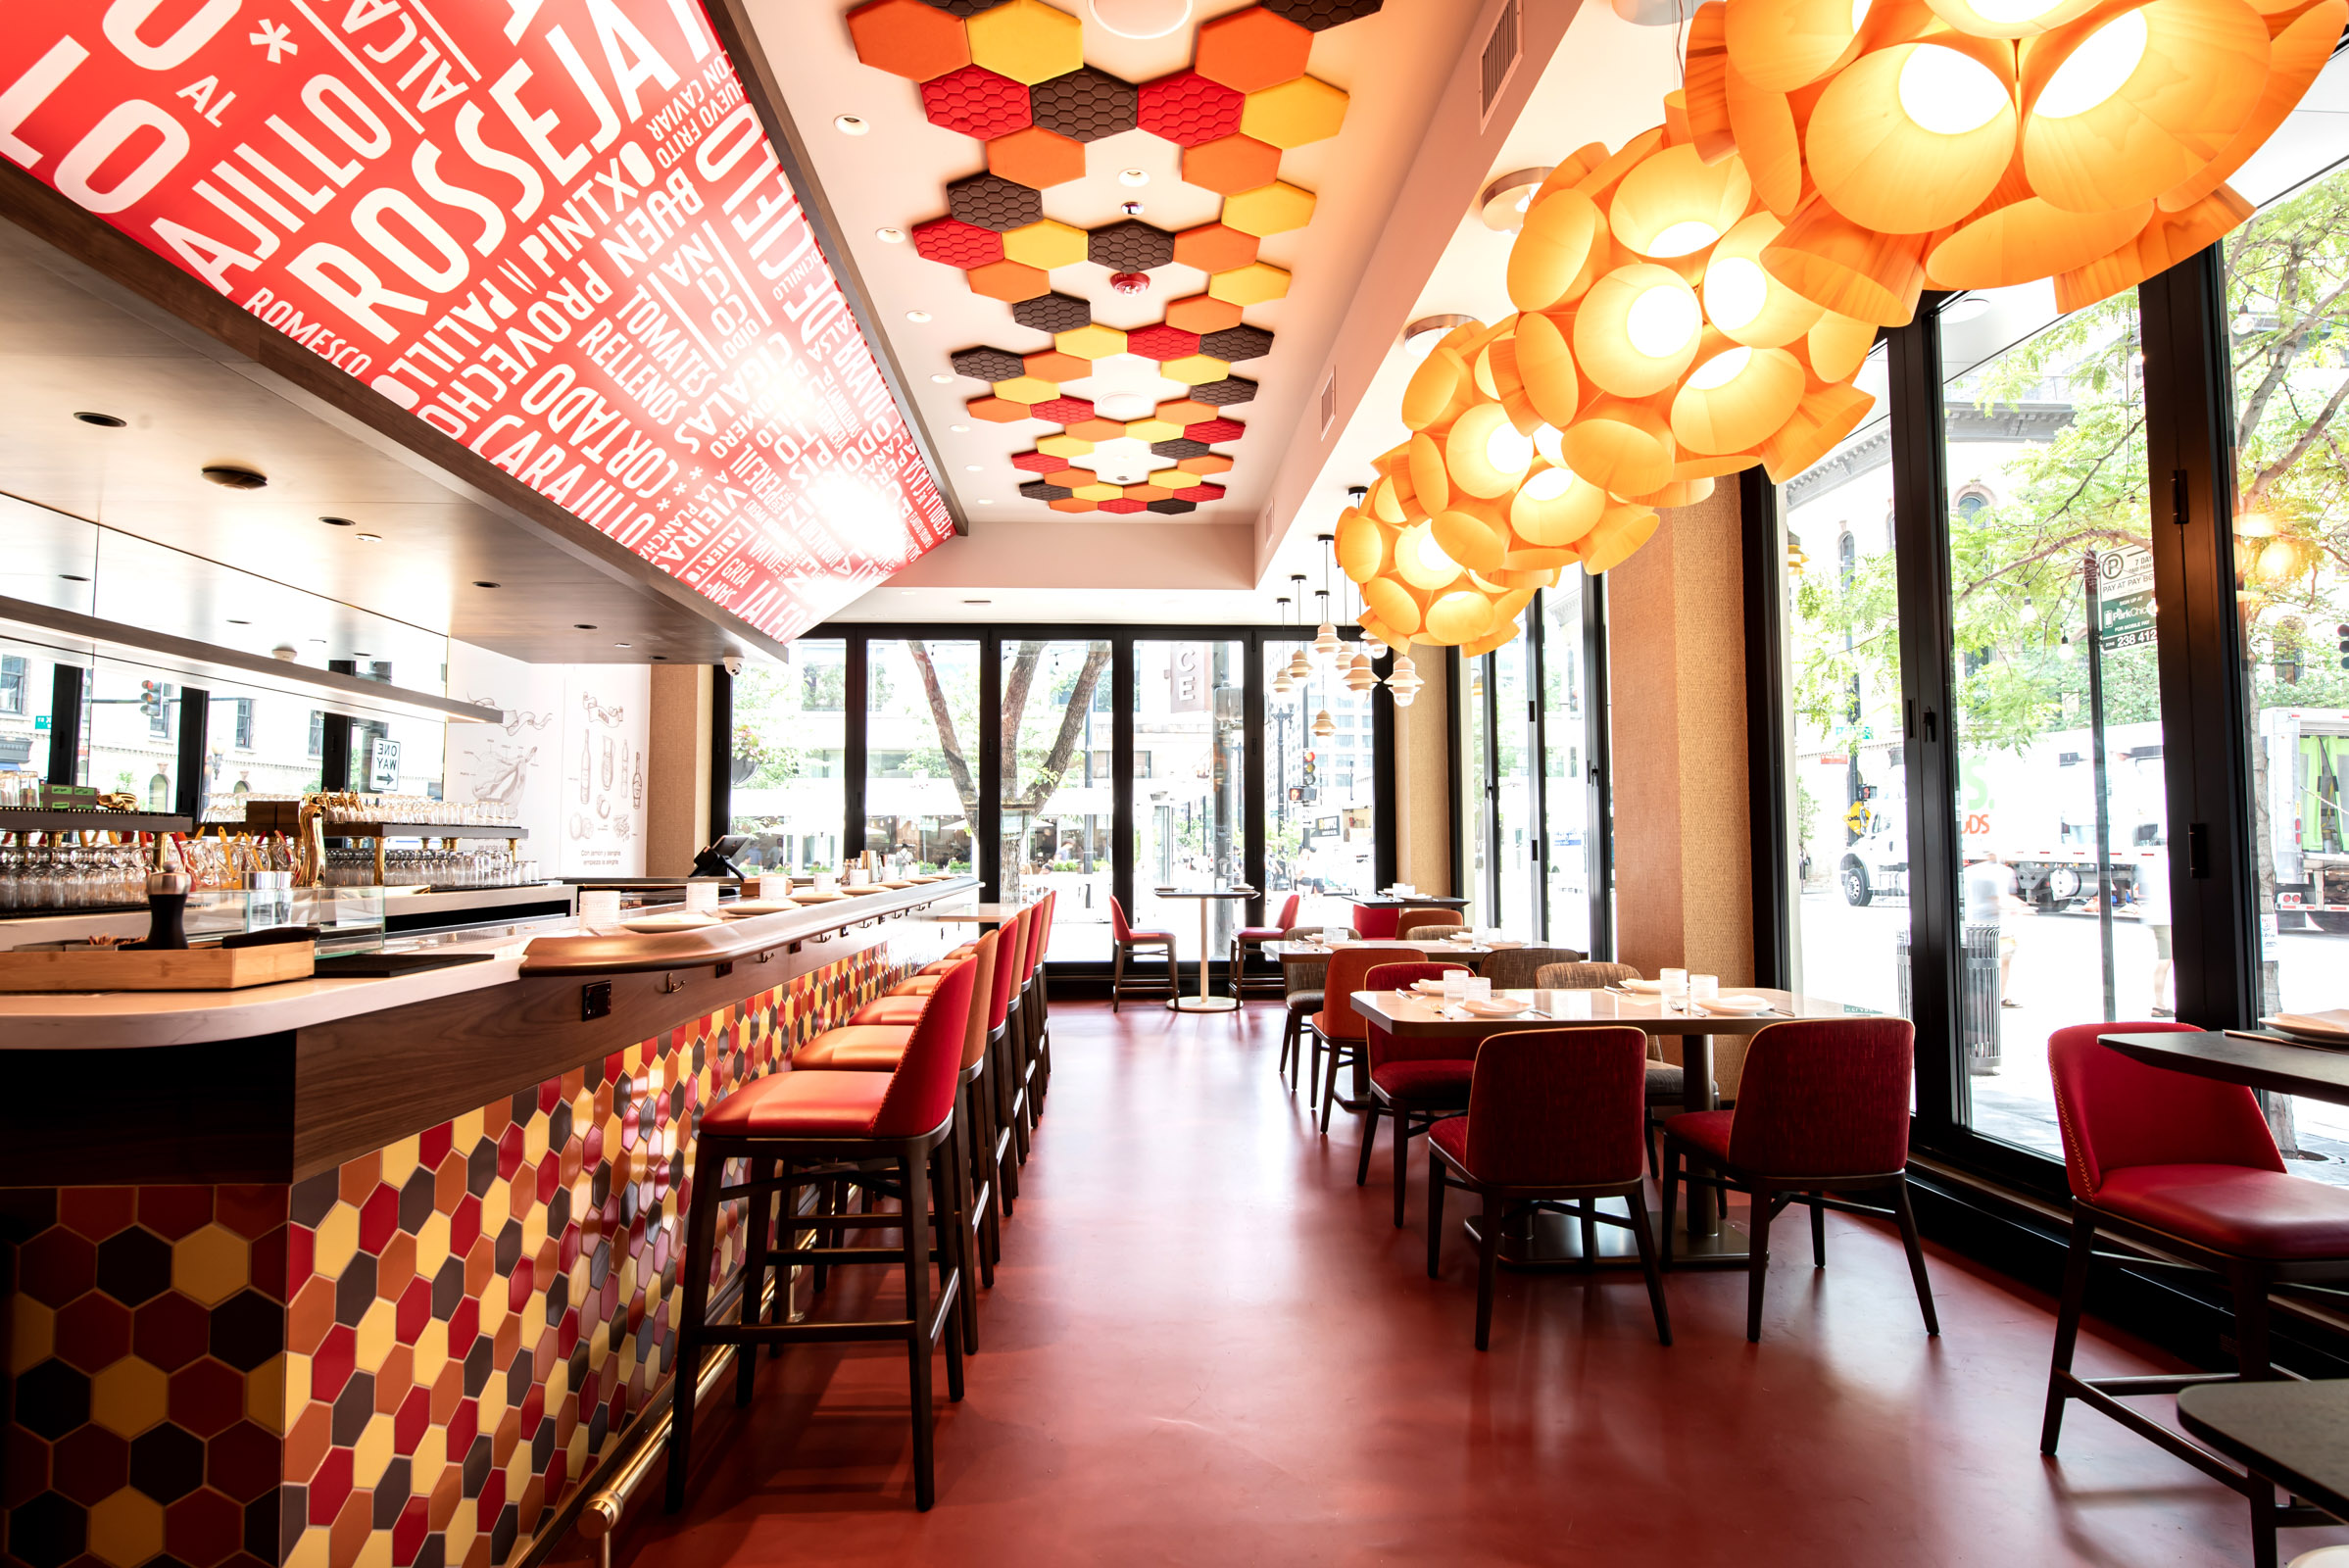 A taste of Spain: LZF’s lamps at José Andrés’s Jaleo restaurants in Chicago and Dubai